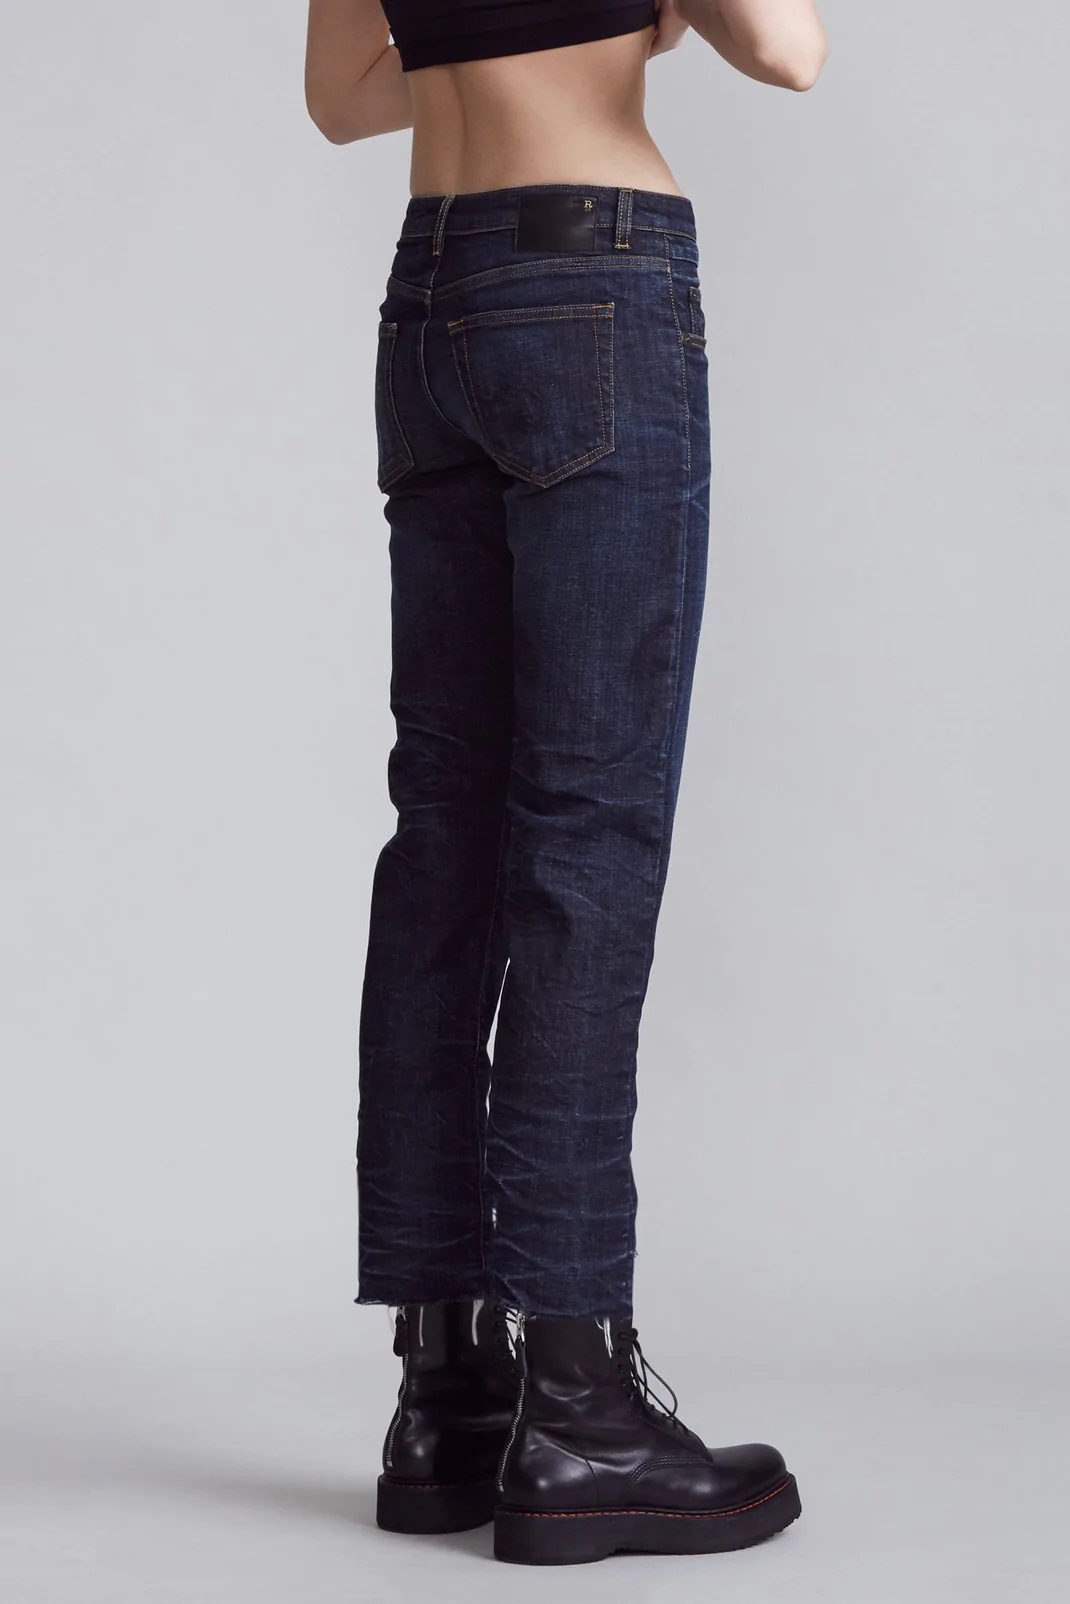 R13 Boy Straight Jeans Howell Indigo 25